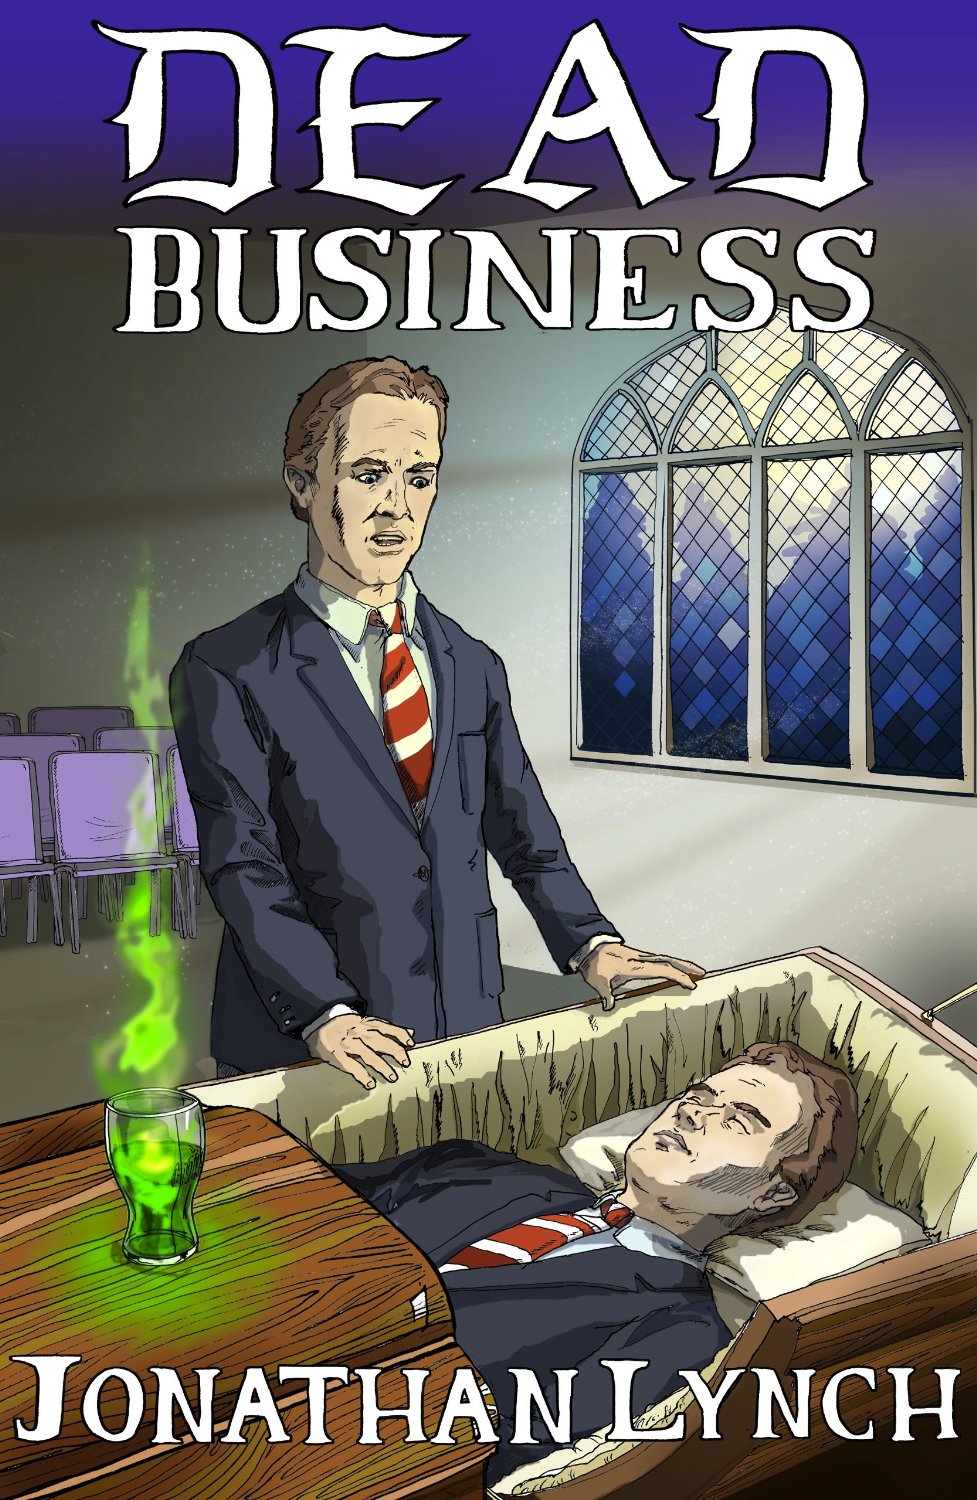 Dead Business